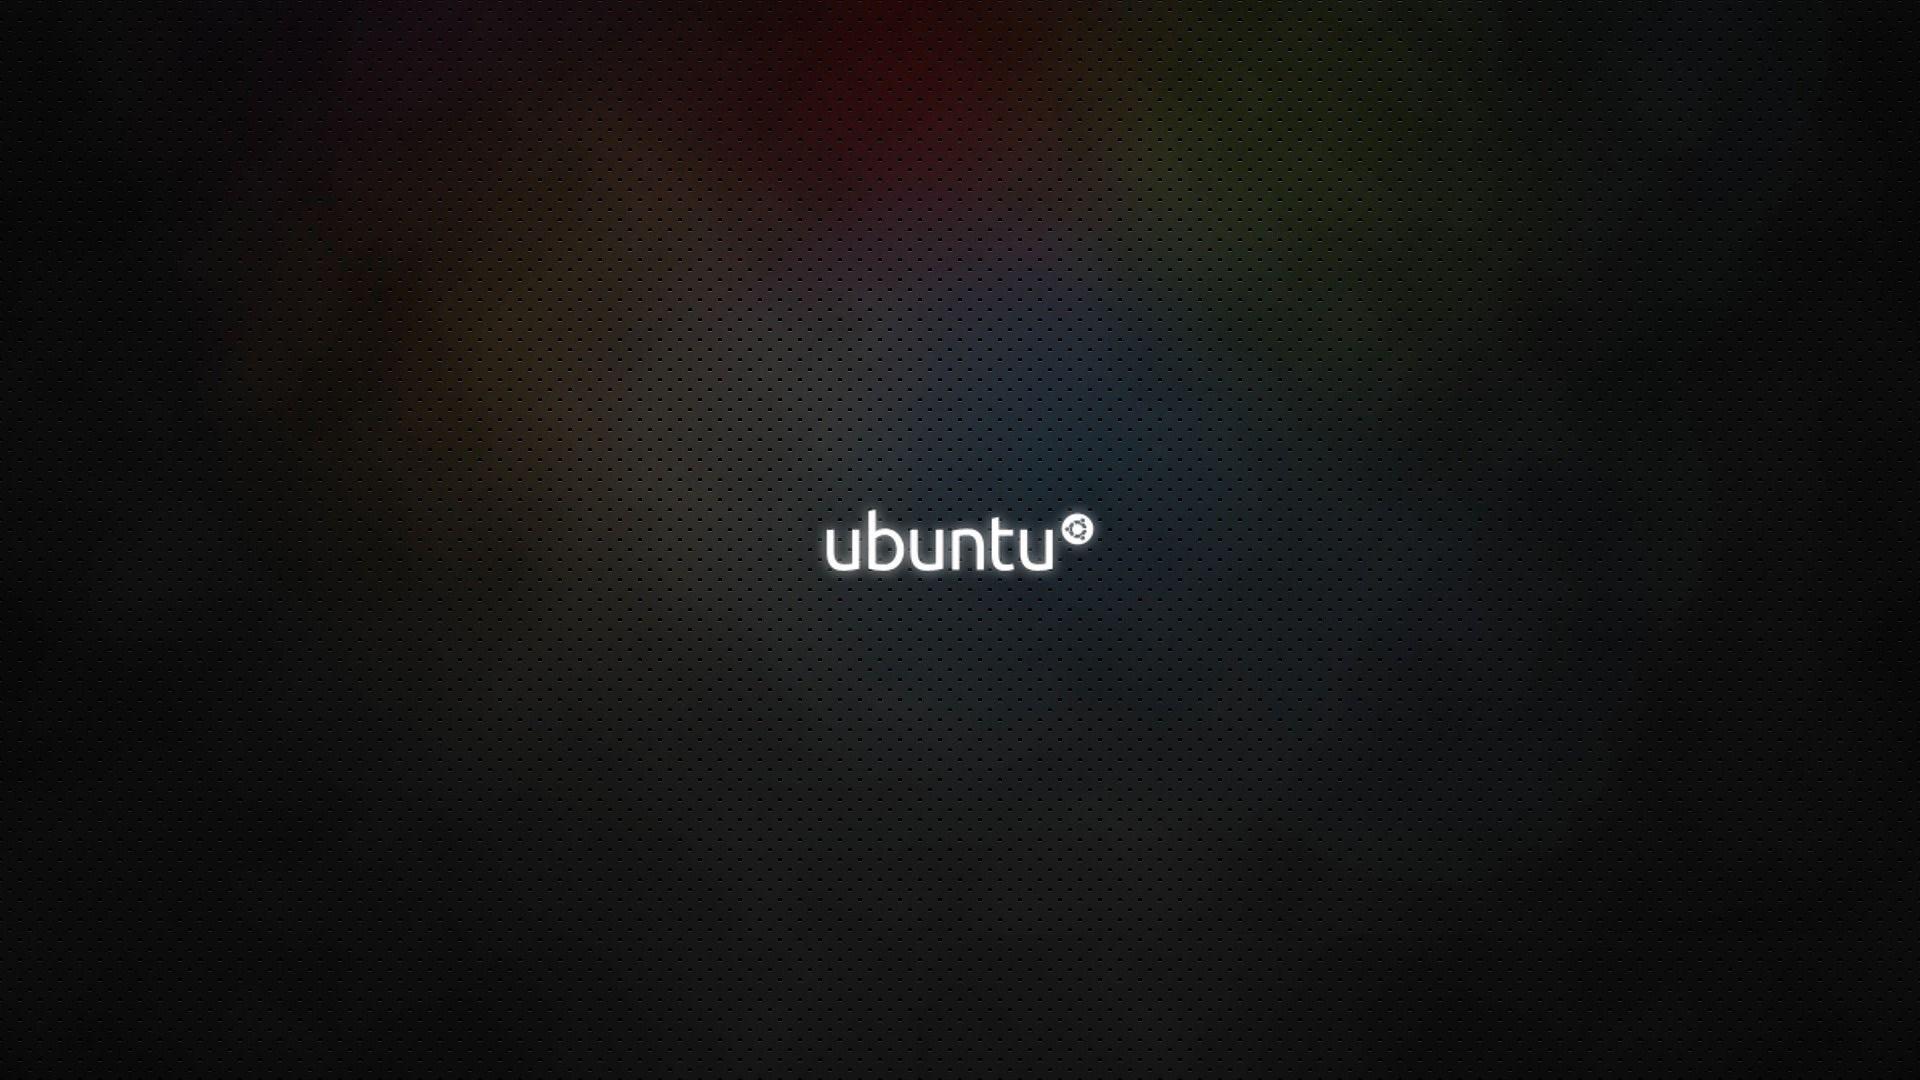 Linux Desktop Wallpaper